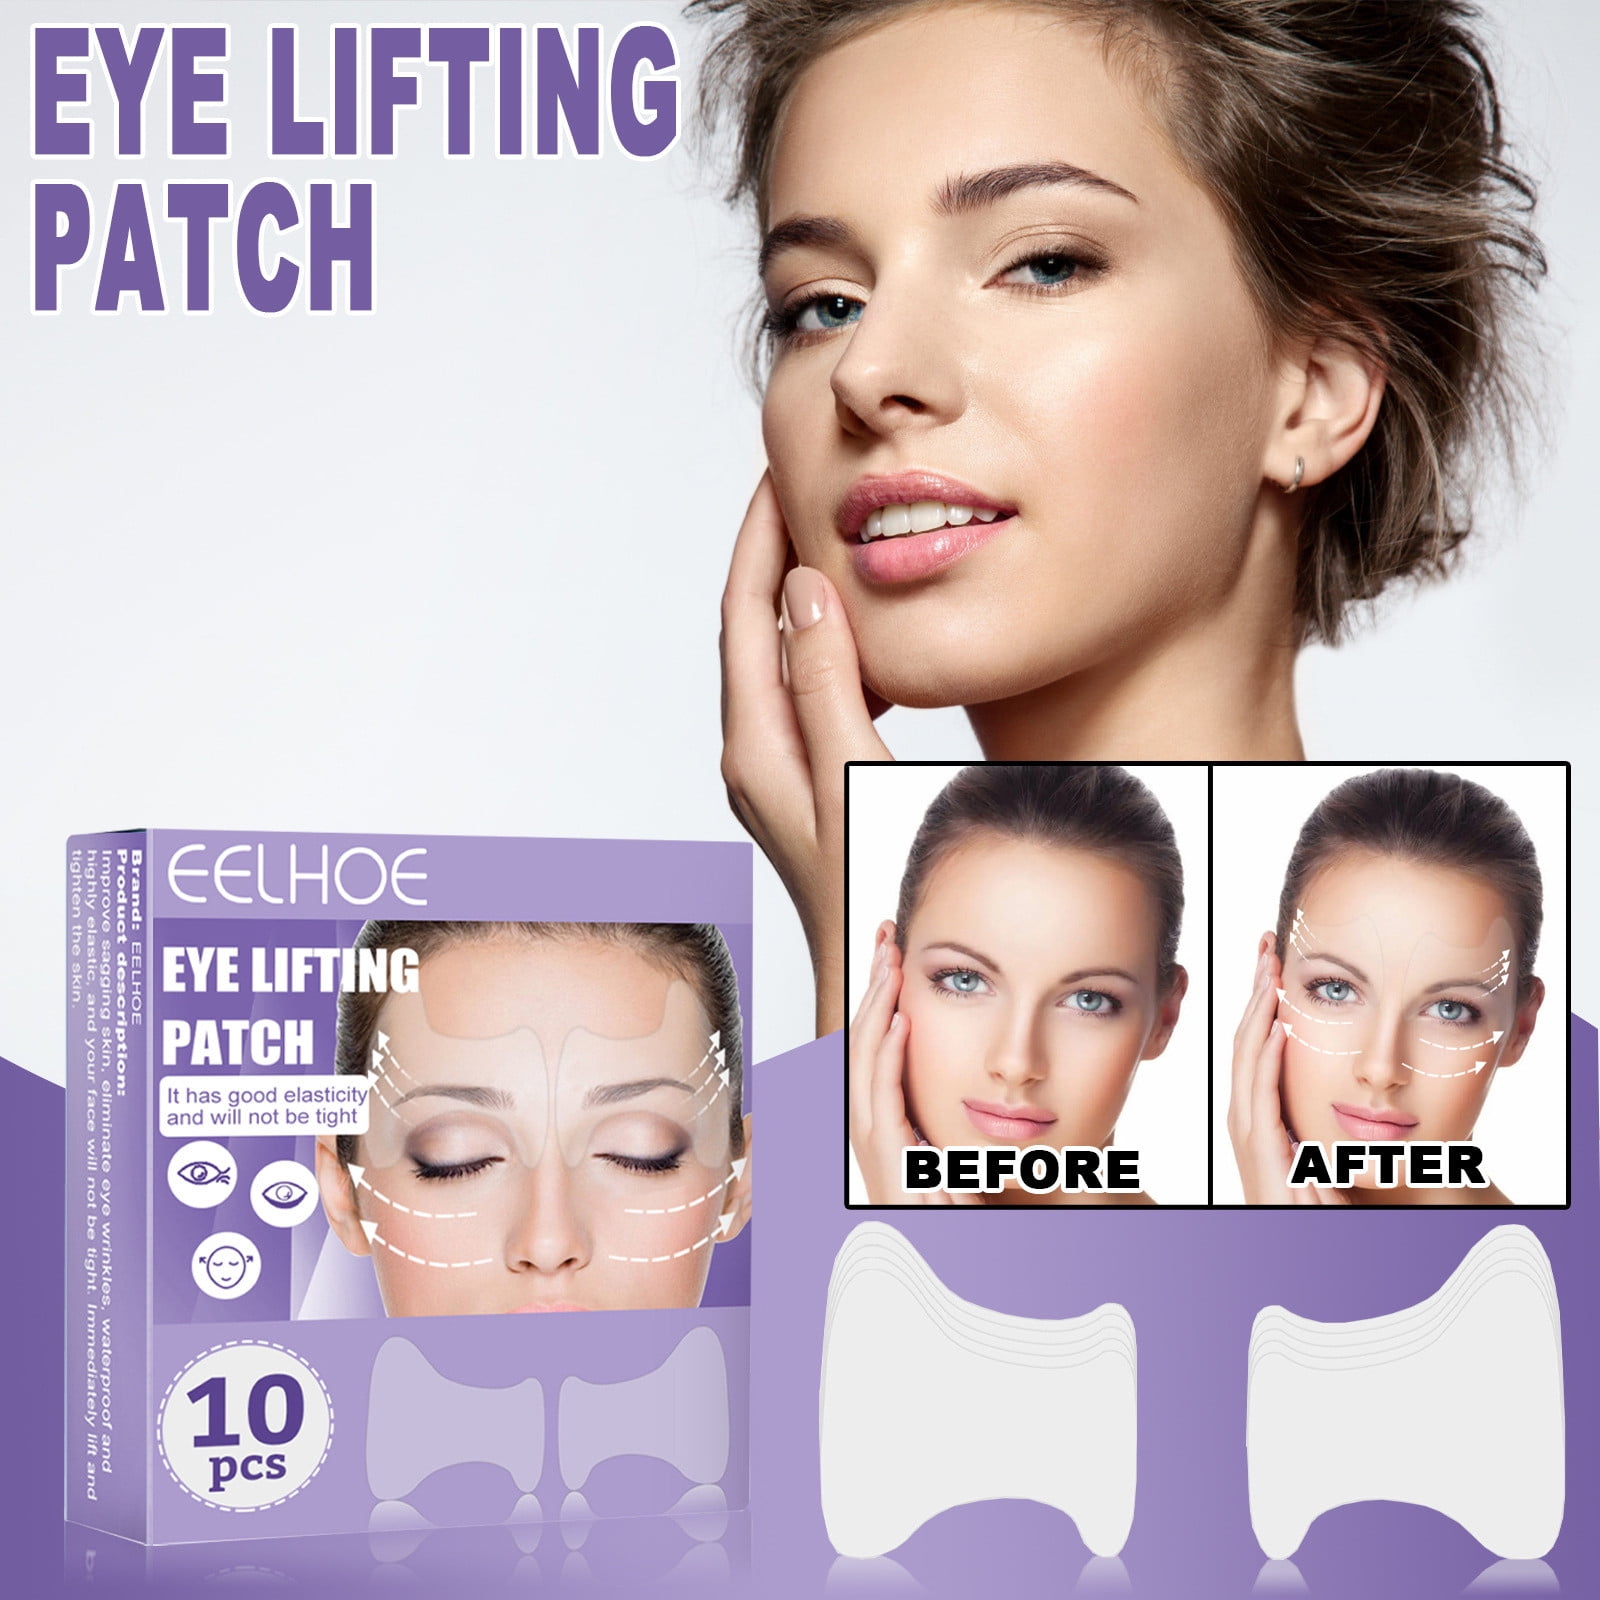 Patchology Flash Patch Skin Care Restoring Under Eye Retinol Mask for Dark  Circles, 5 ct